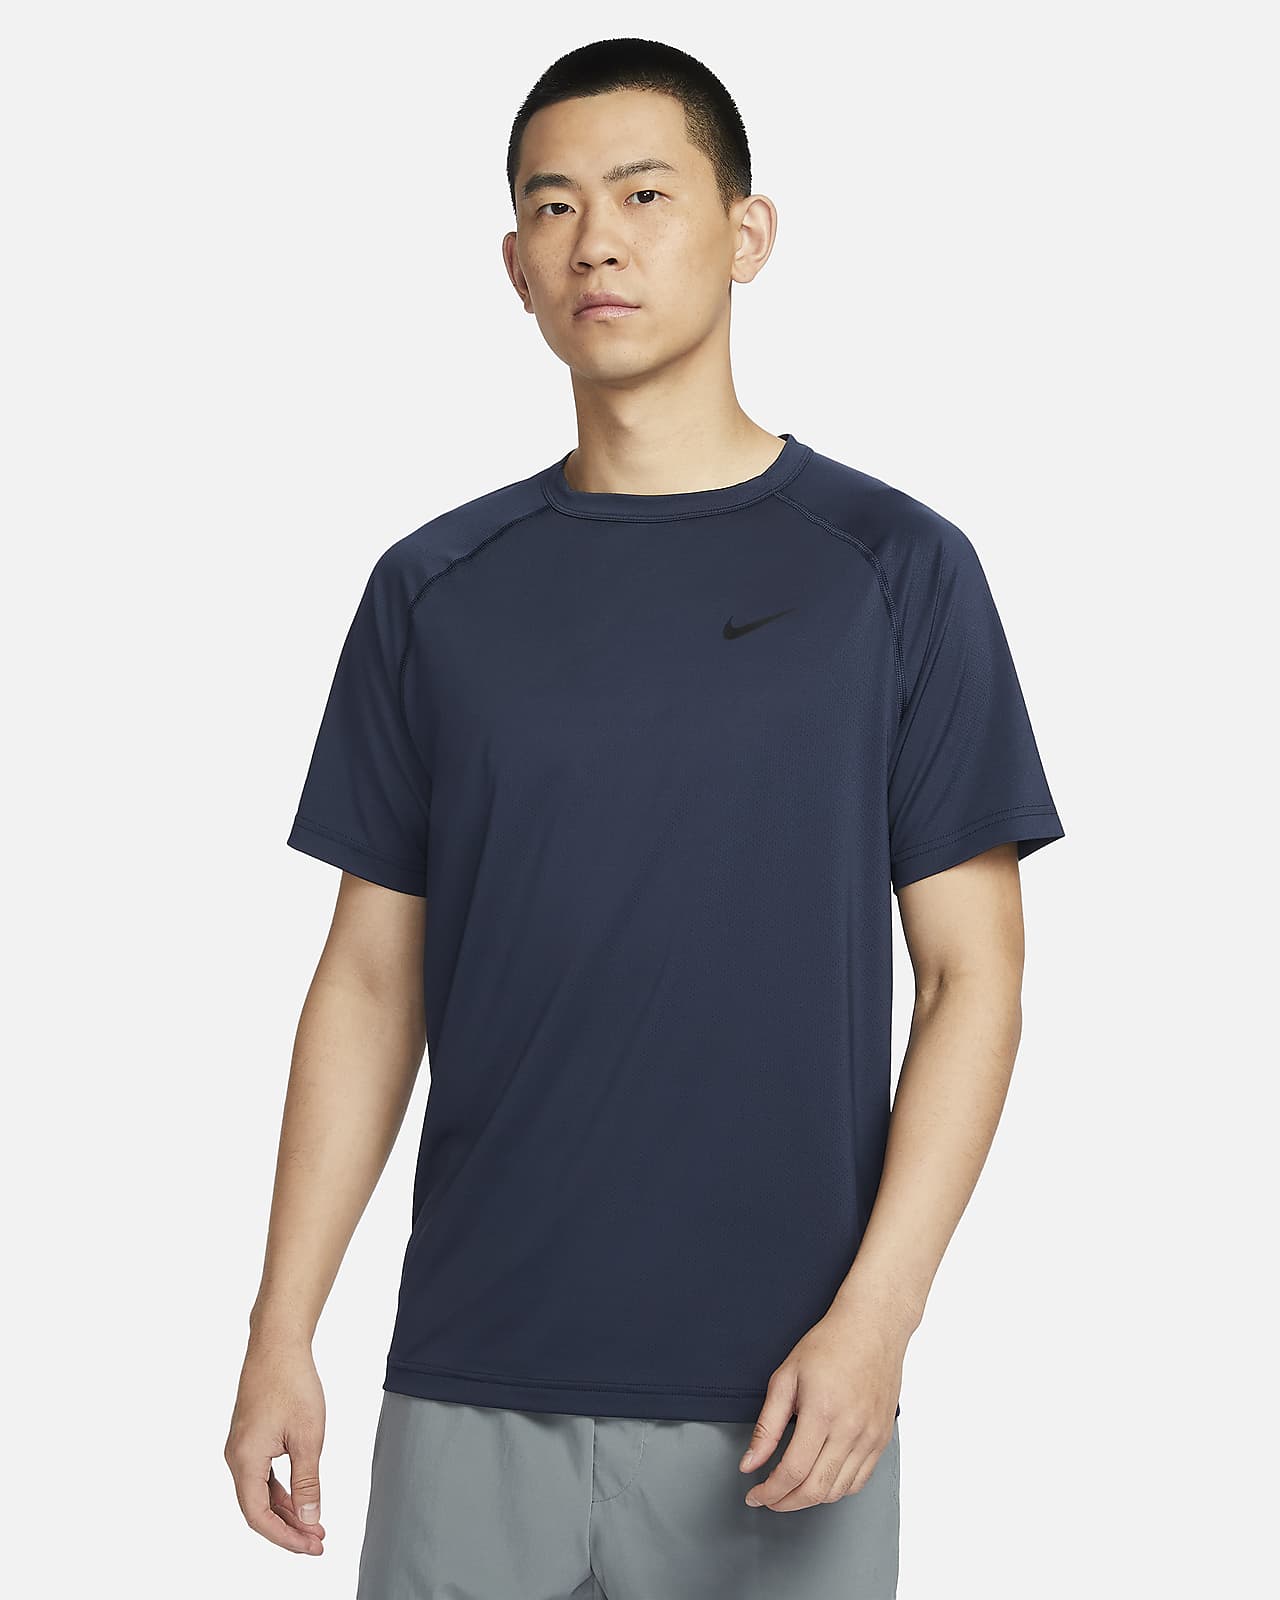 Nike Dri-FIT Ready Men's Short-Sleeve Fitness Top